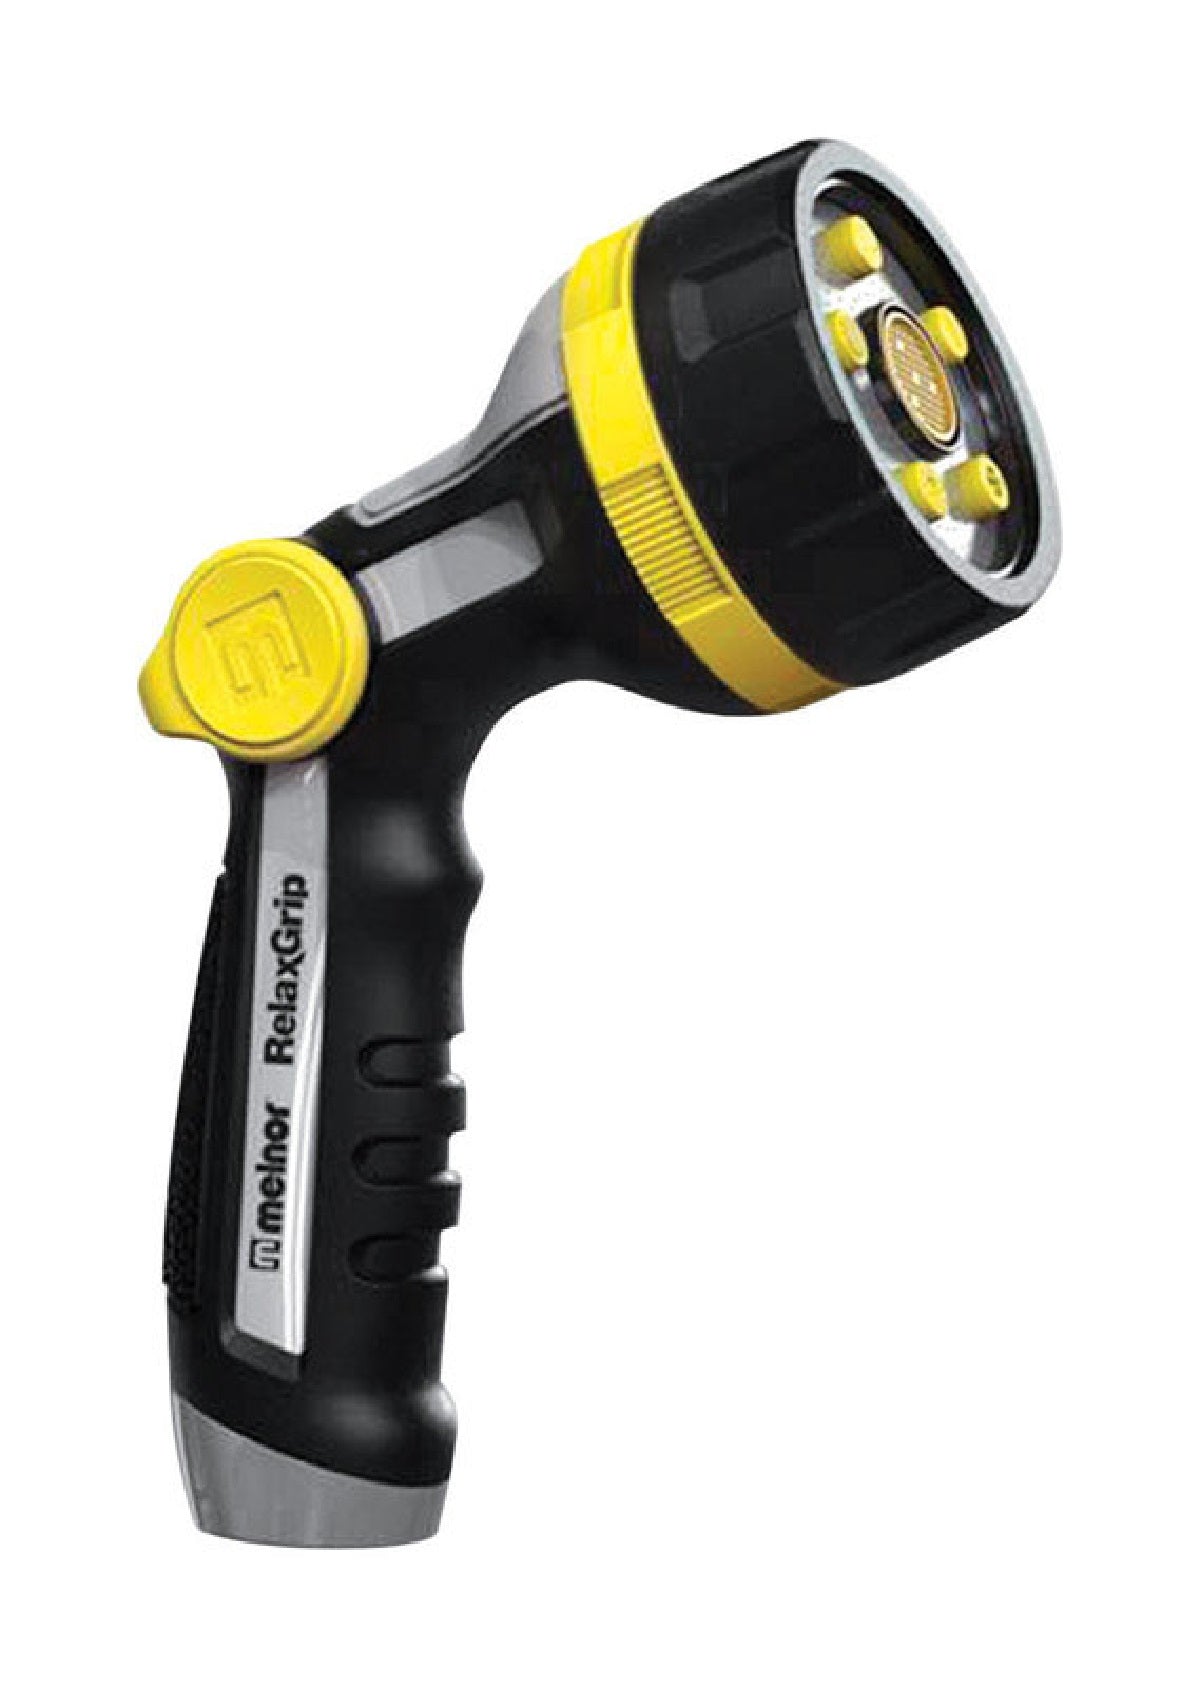 Melnor R551 RelaxGrip Ultralight Thumb-Control 5-Pattern Nozzle, Black/Yellow